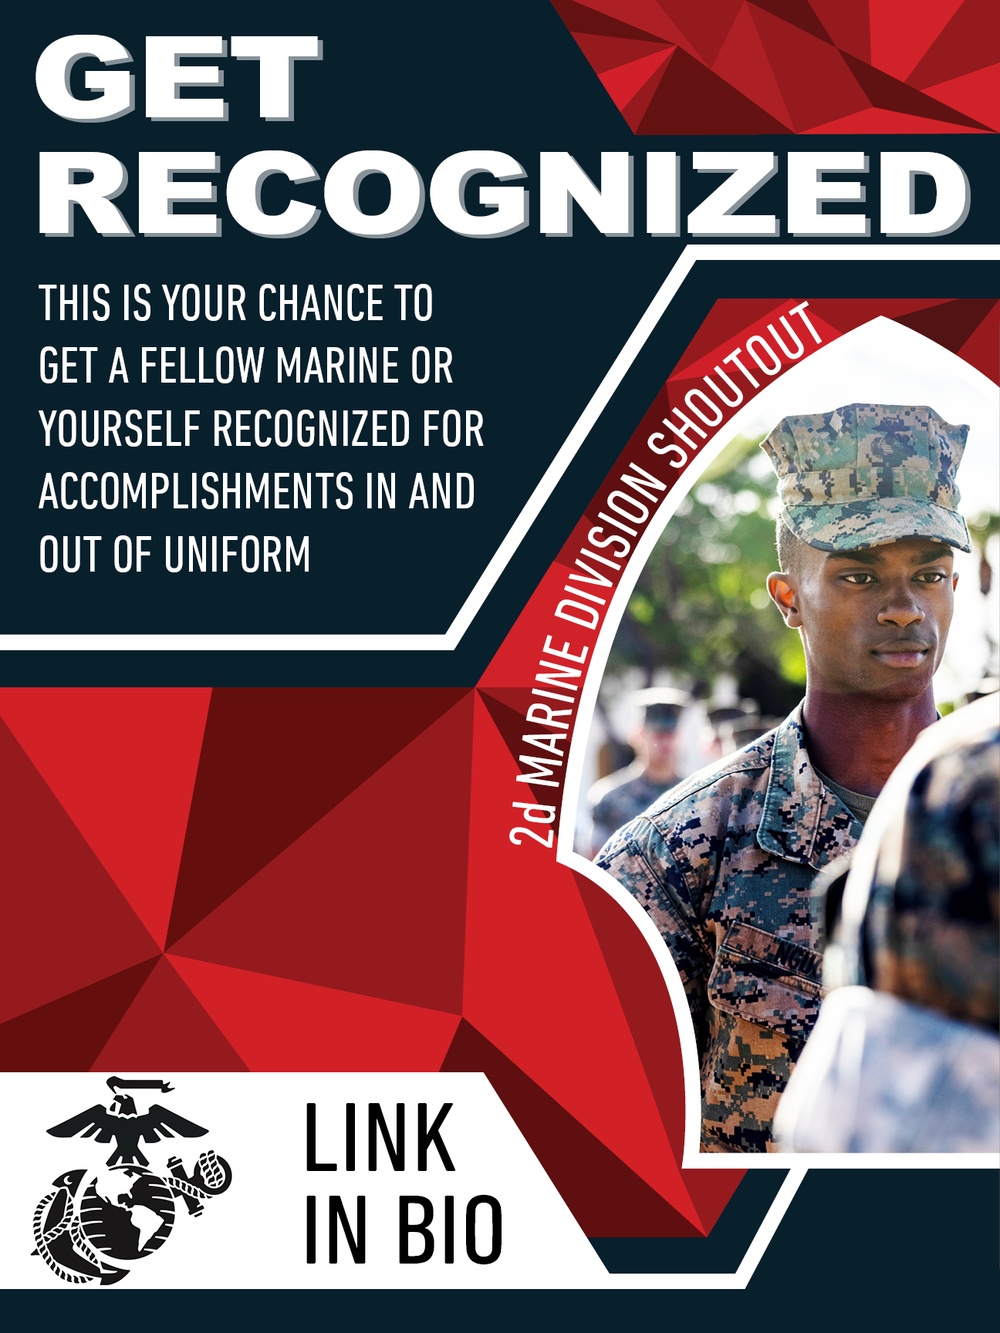 2d Marine Division Shout Out Social Media Post